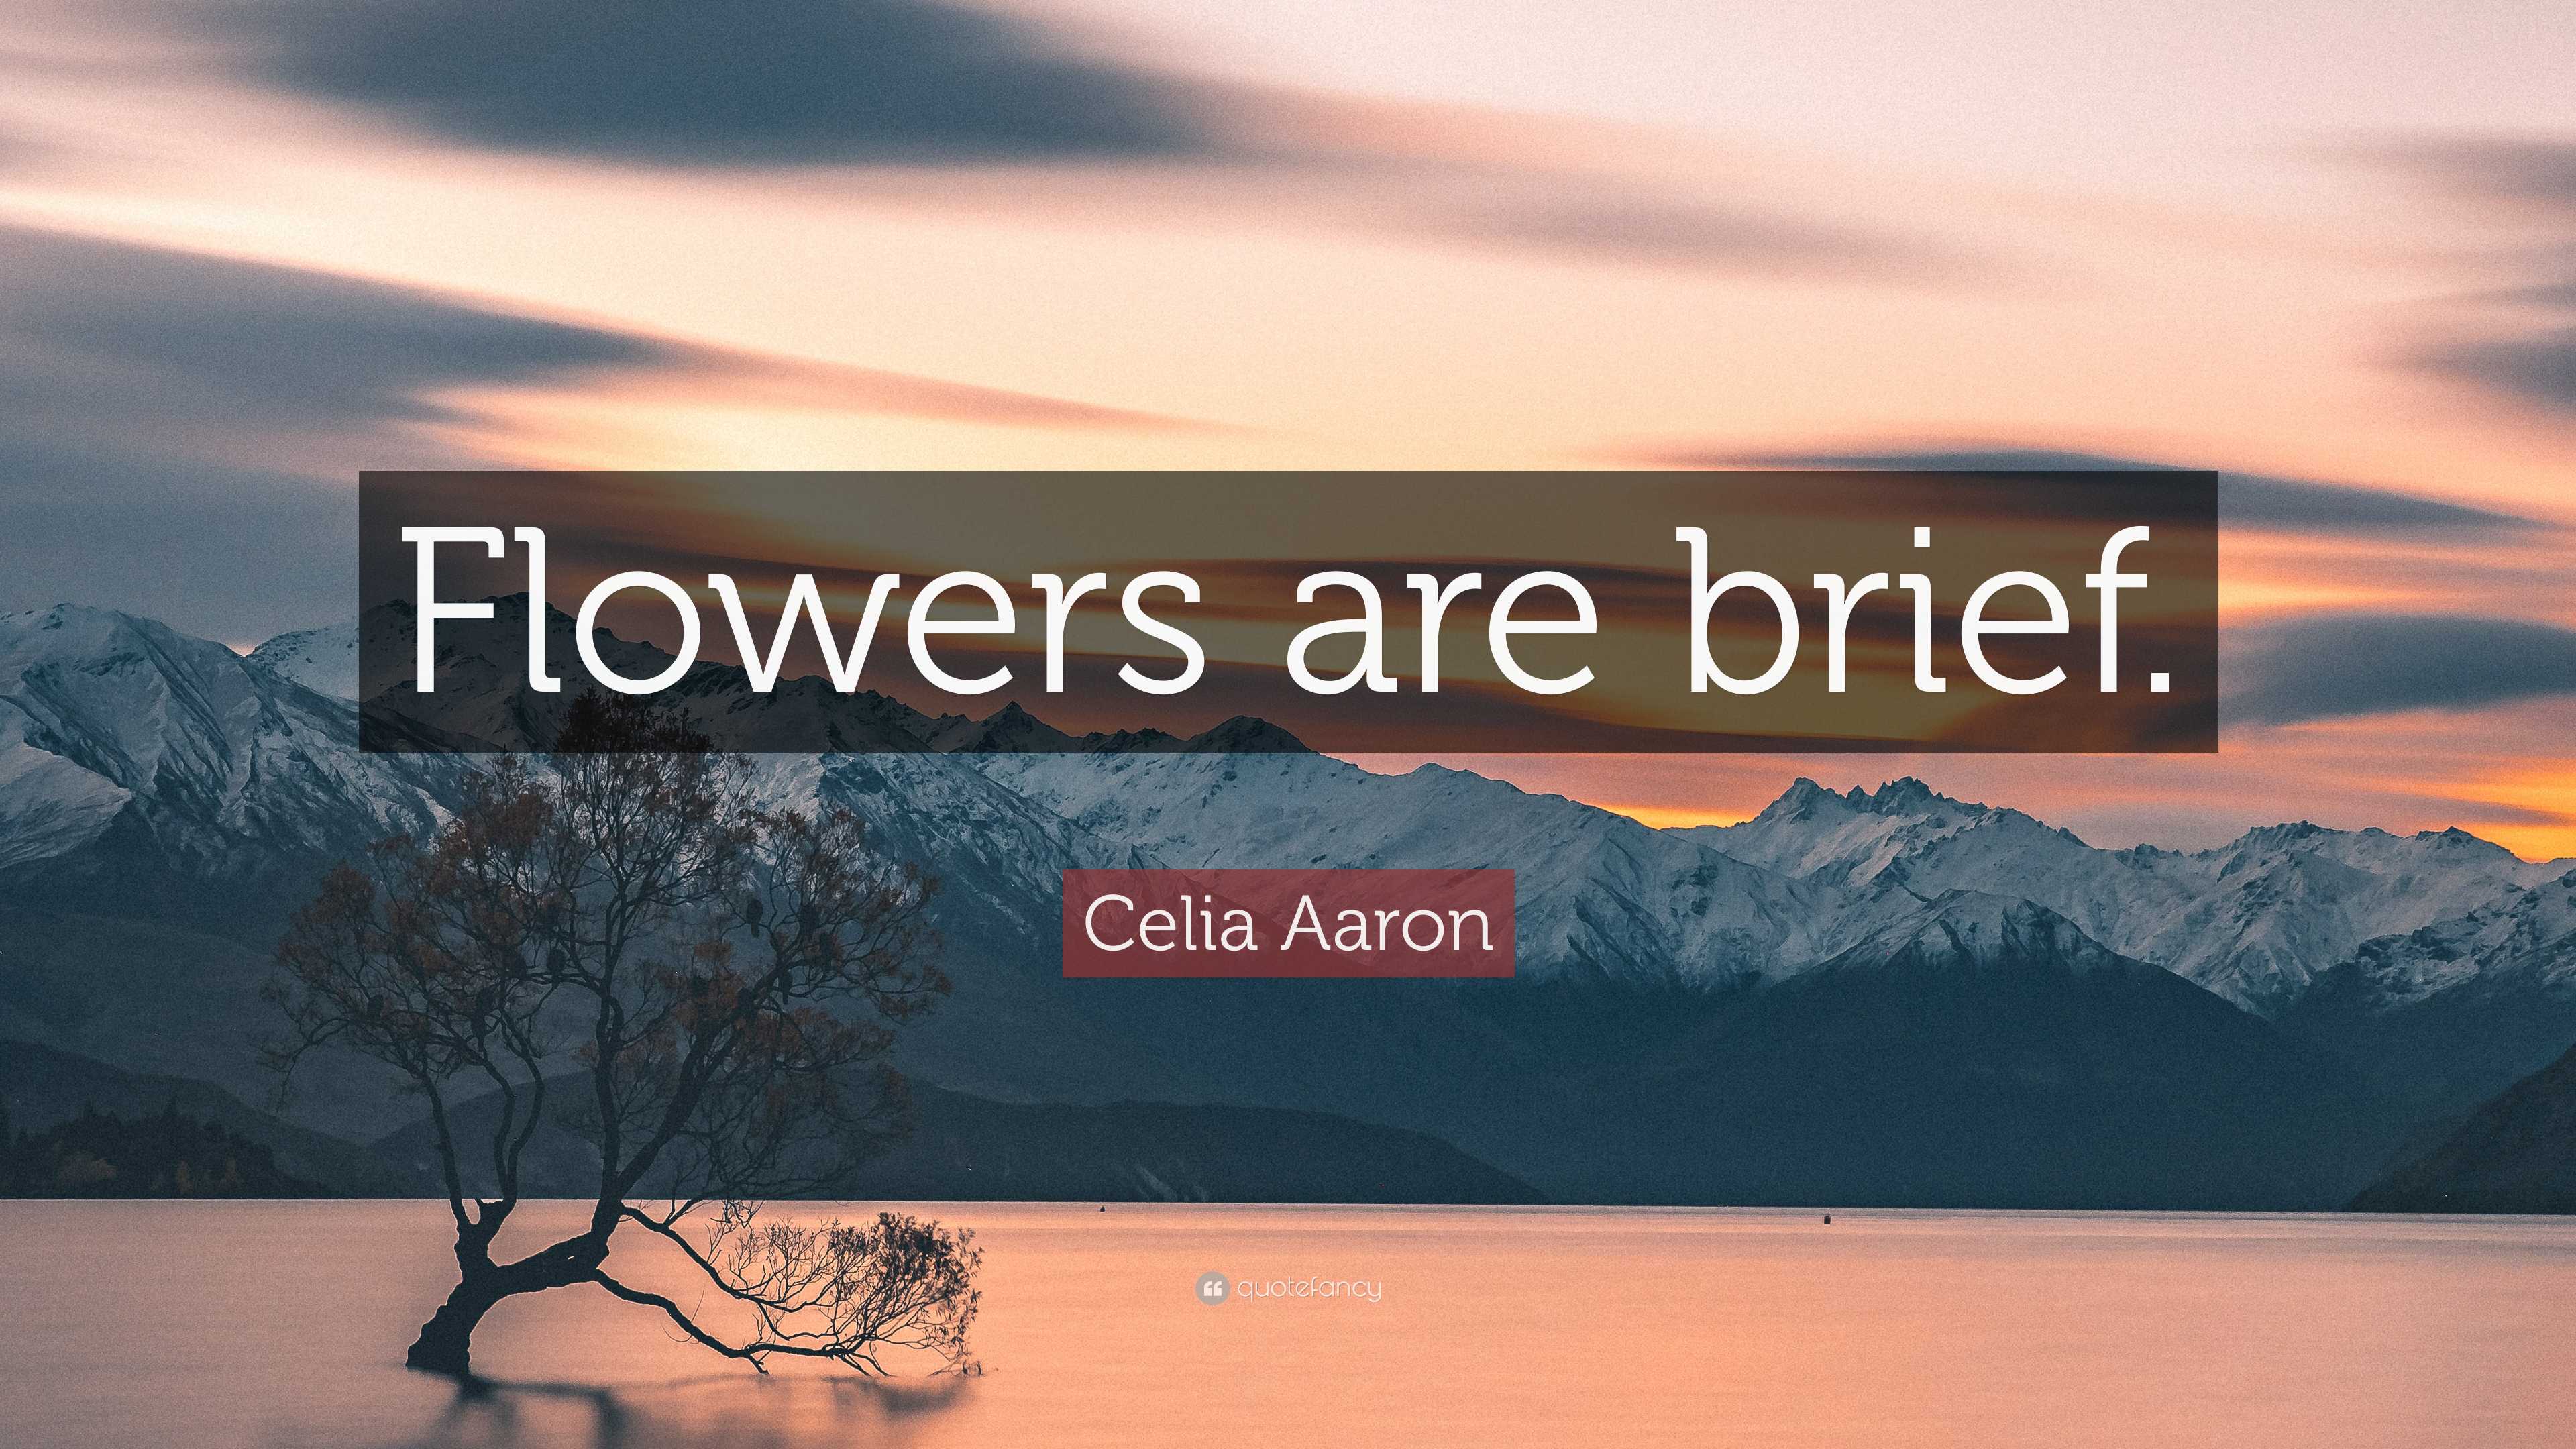 Celia Aaron Quote: “Flowers are brief.”